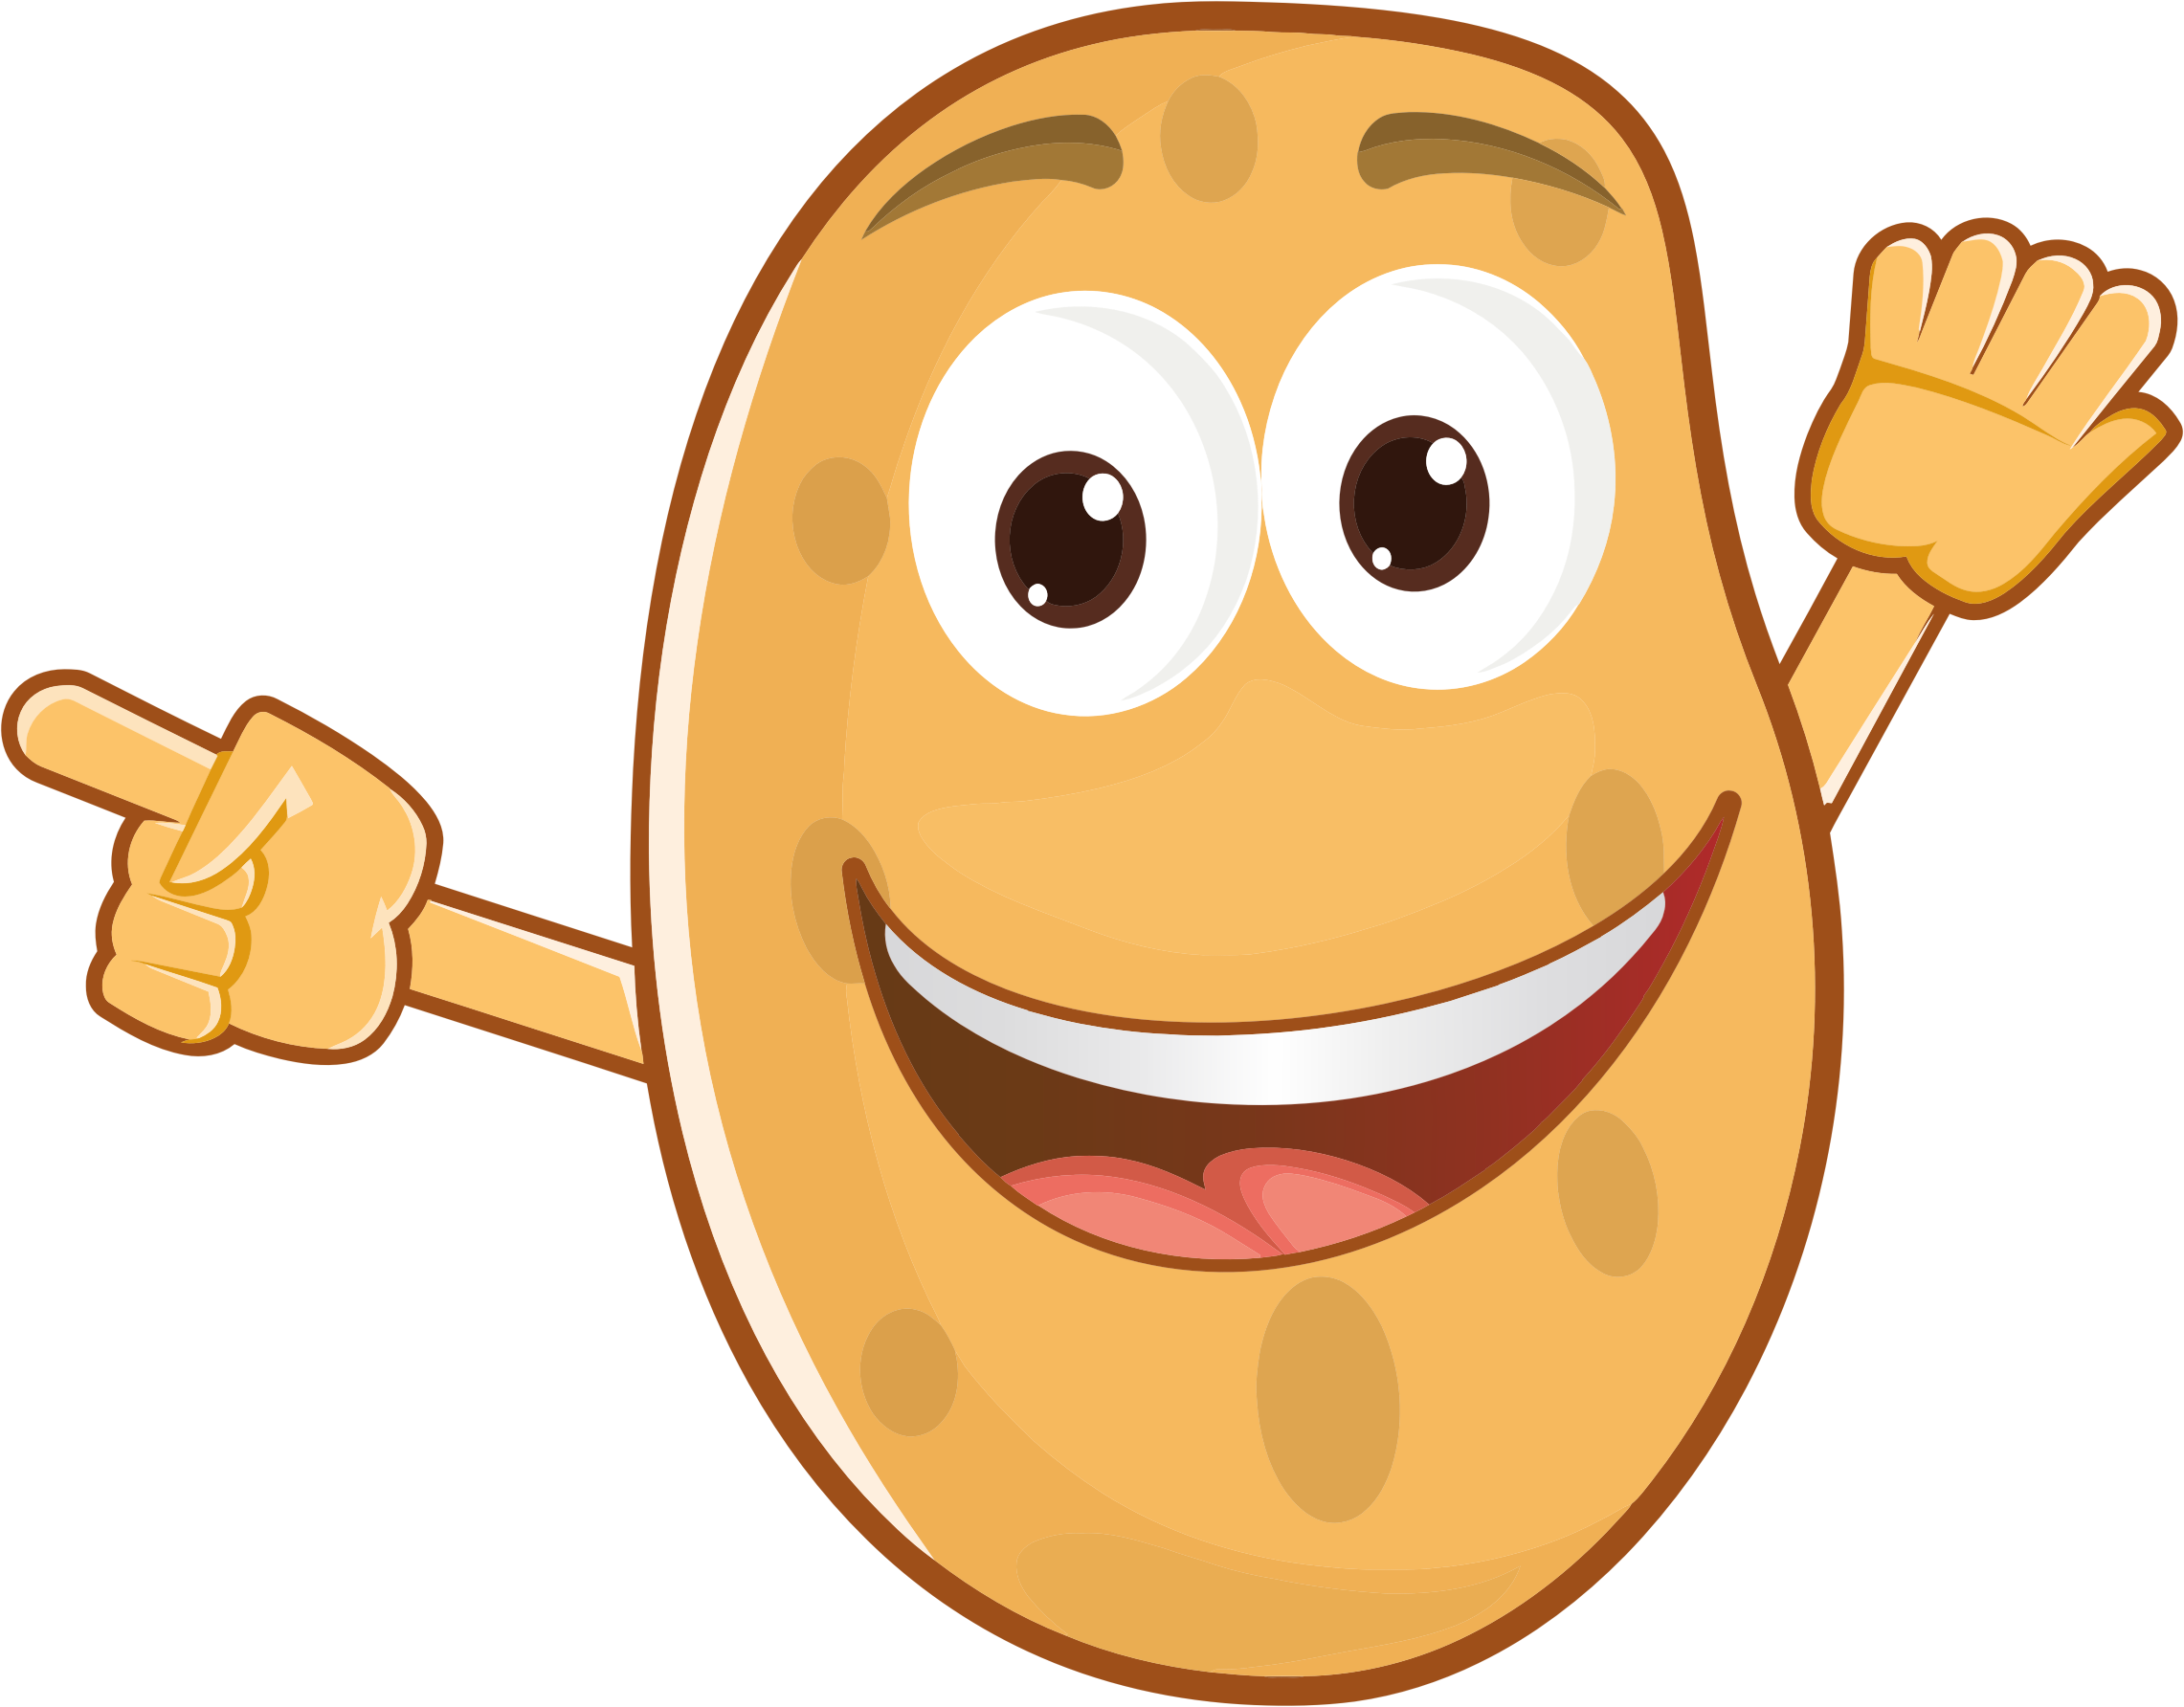 Potato clipart potato food. Anthropomorphic big image png